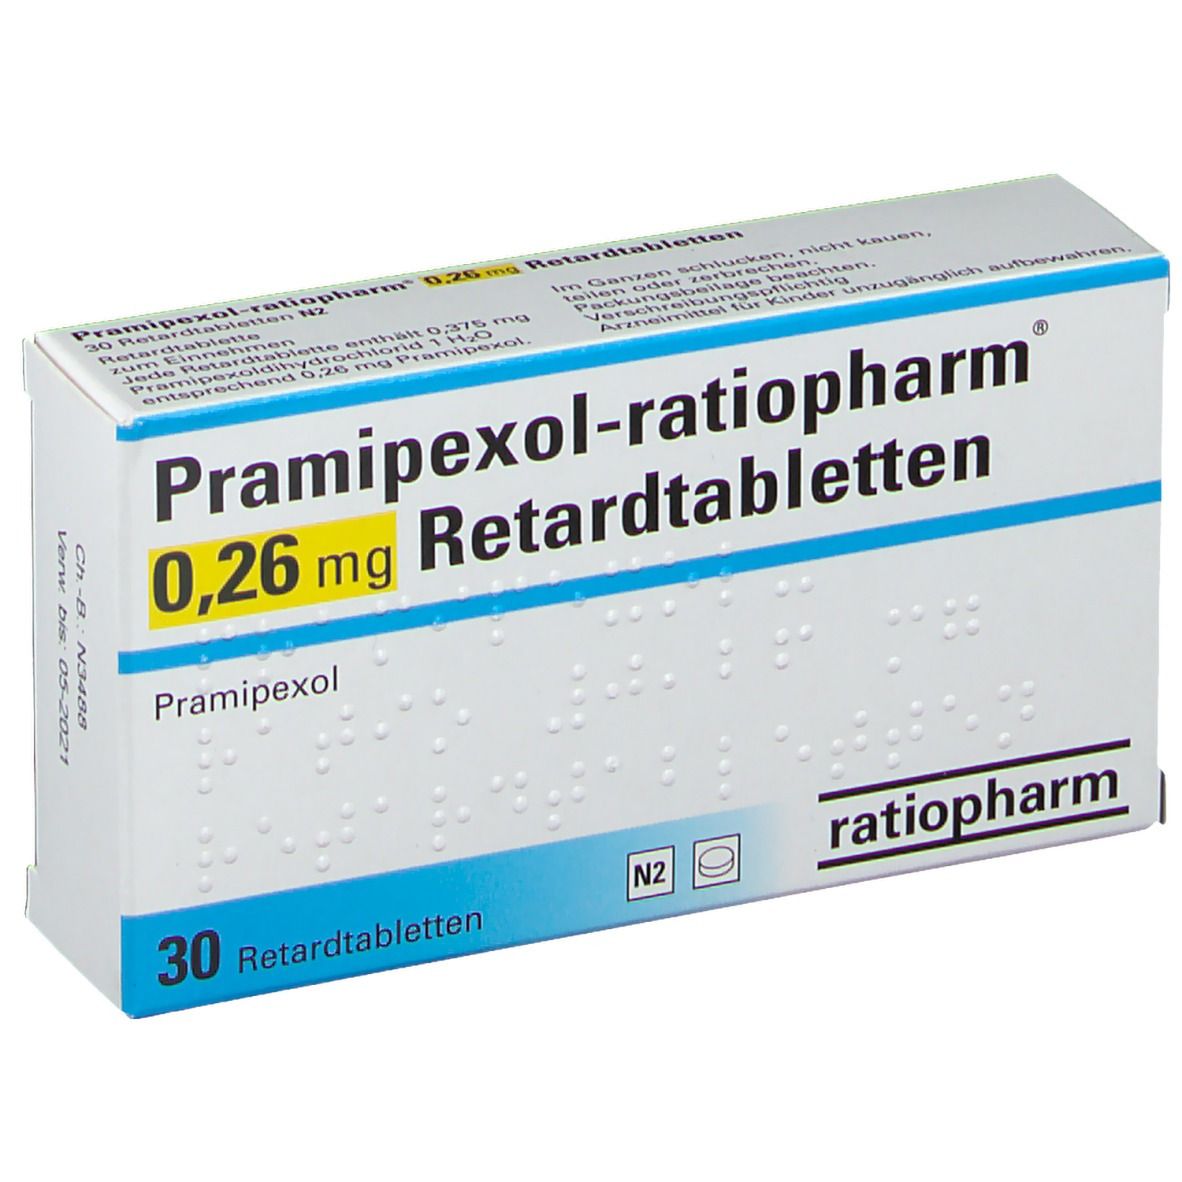 Pramipexol-ratiopharm® 0,26 mg